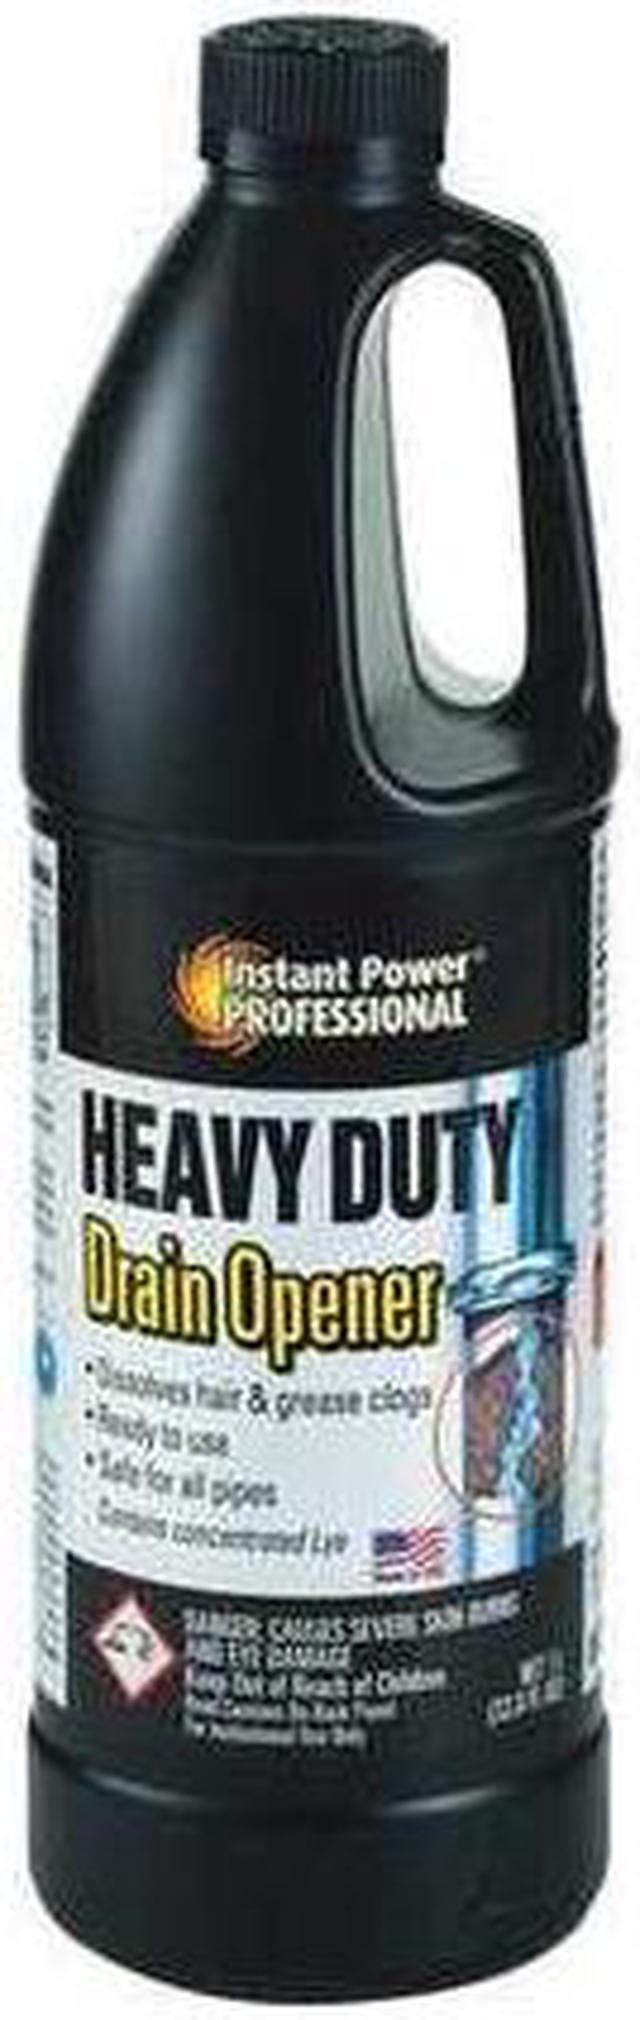 Instant Power Professional Heavy Duty Drain Opener  